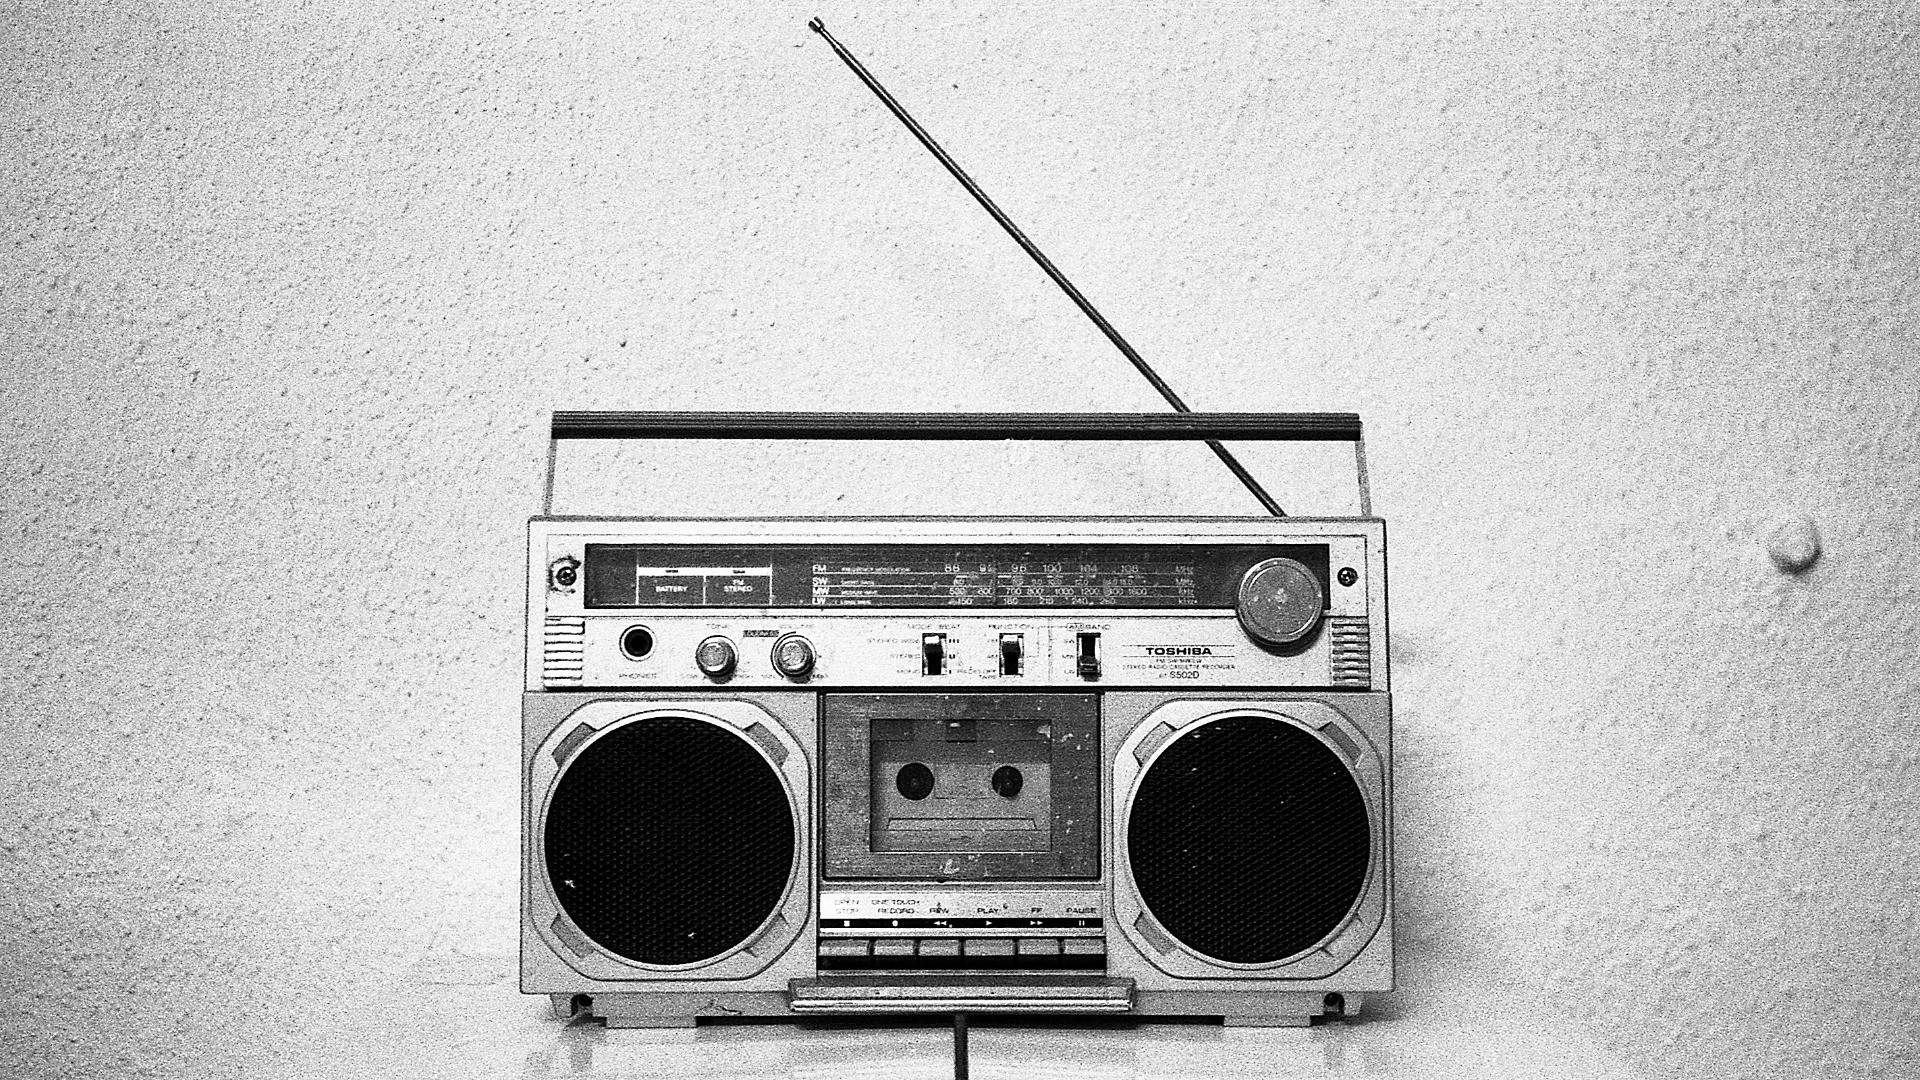 La radio reste un média actuel
(Photo:Bernhard Benke/Flickr/CC BY-NC-ND 2.0)